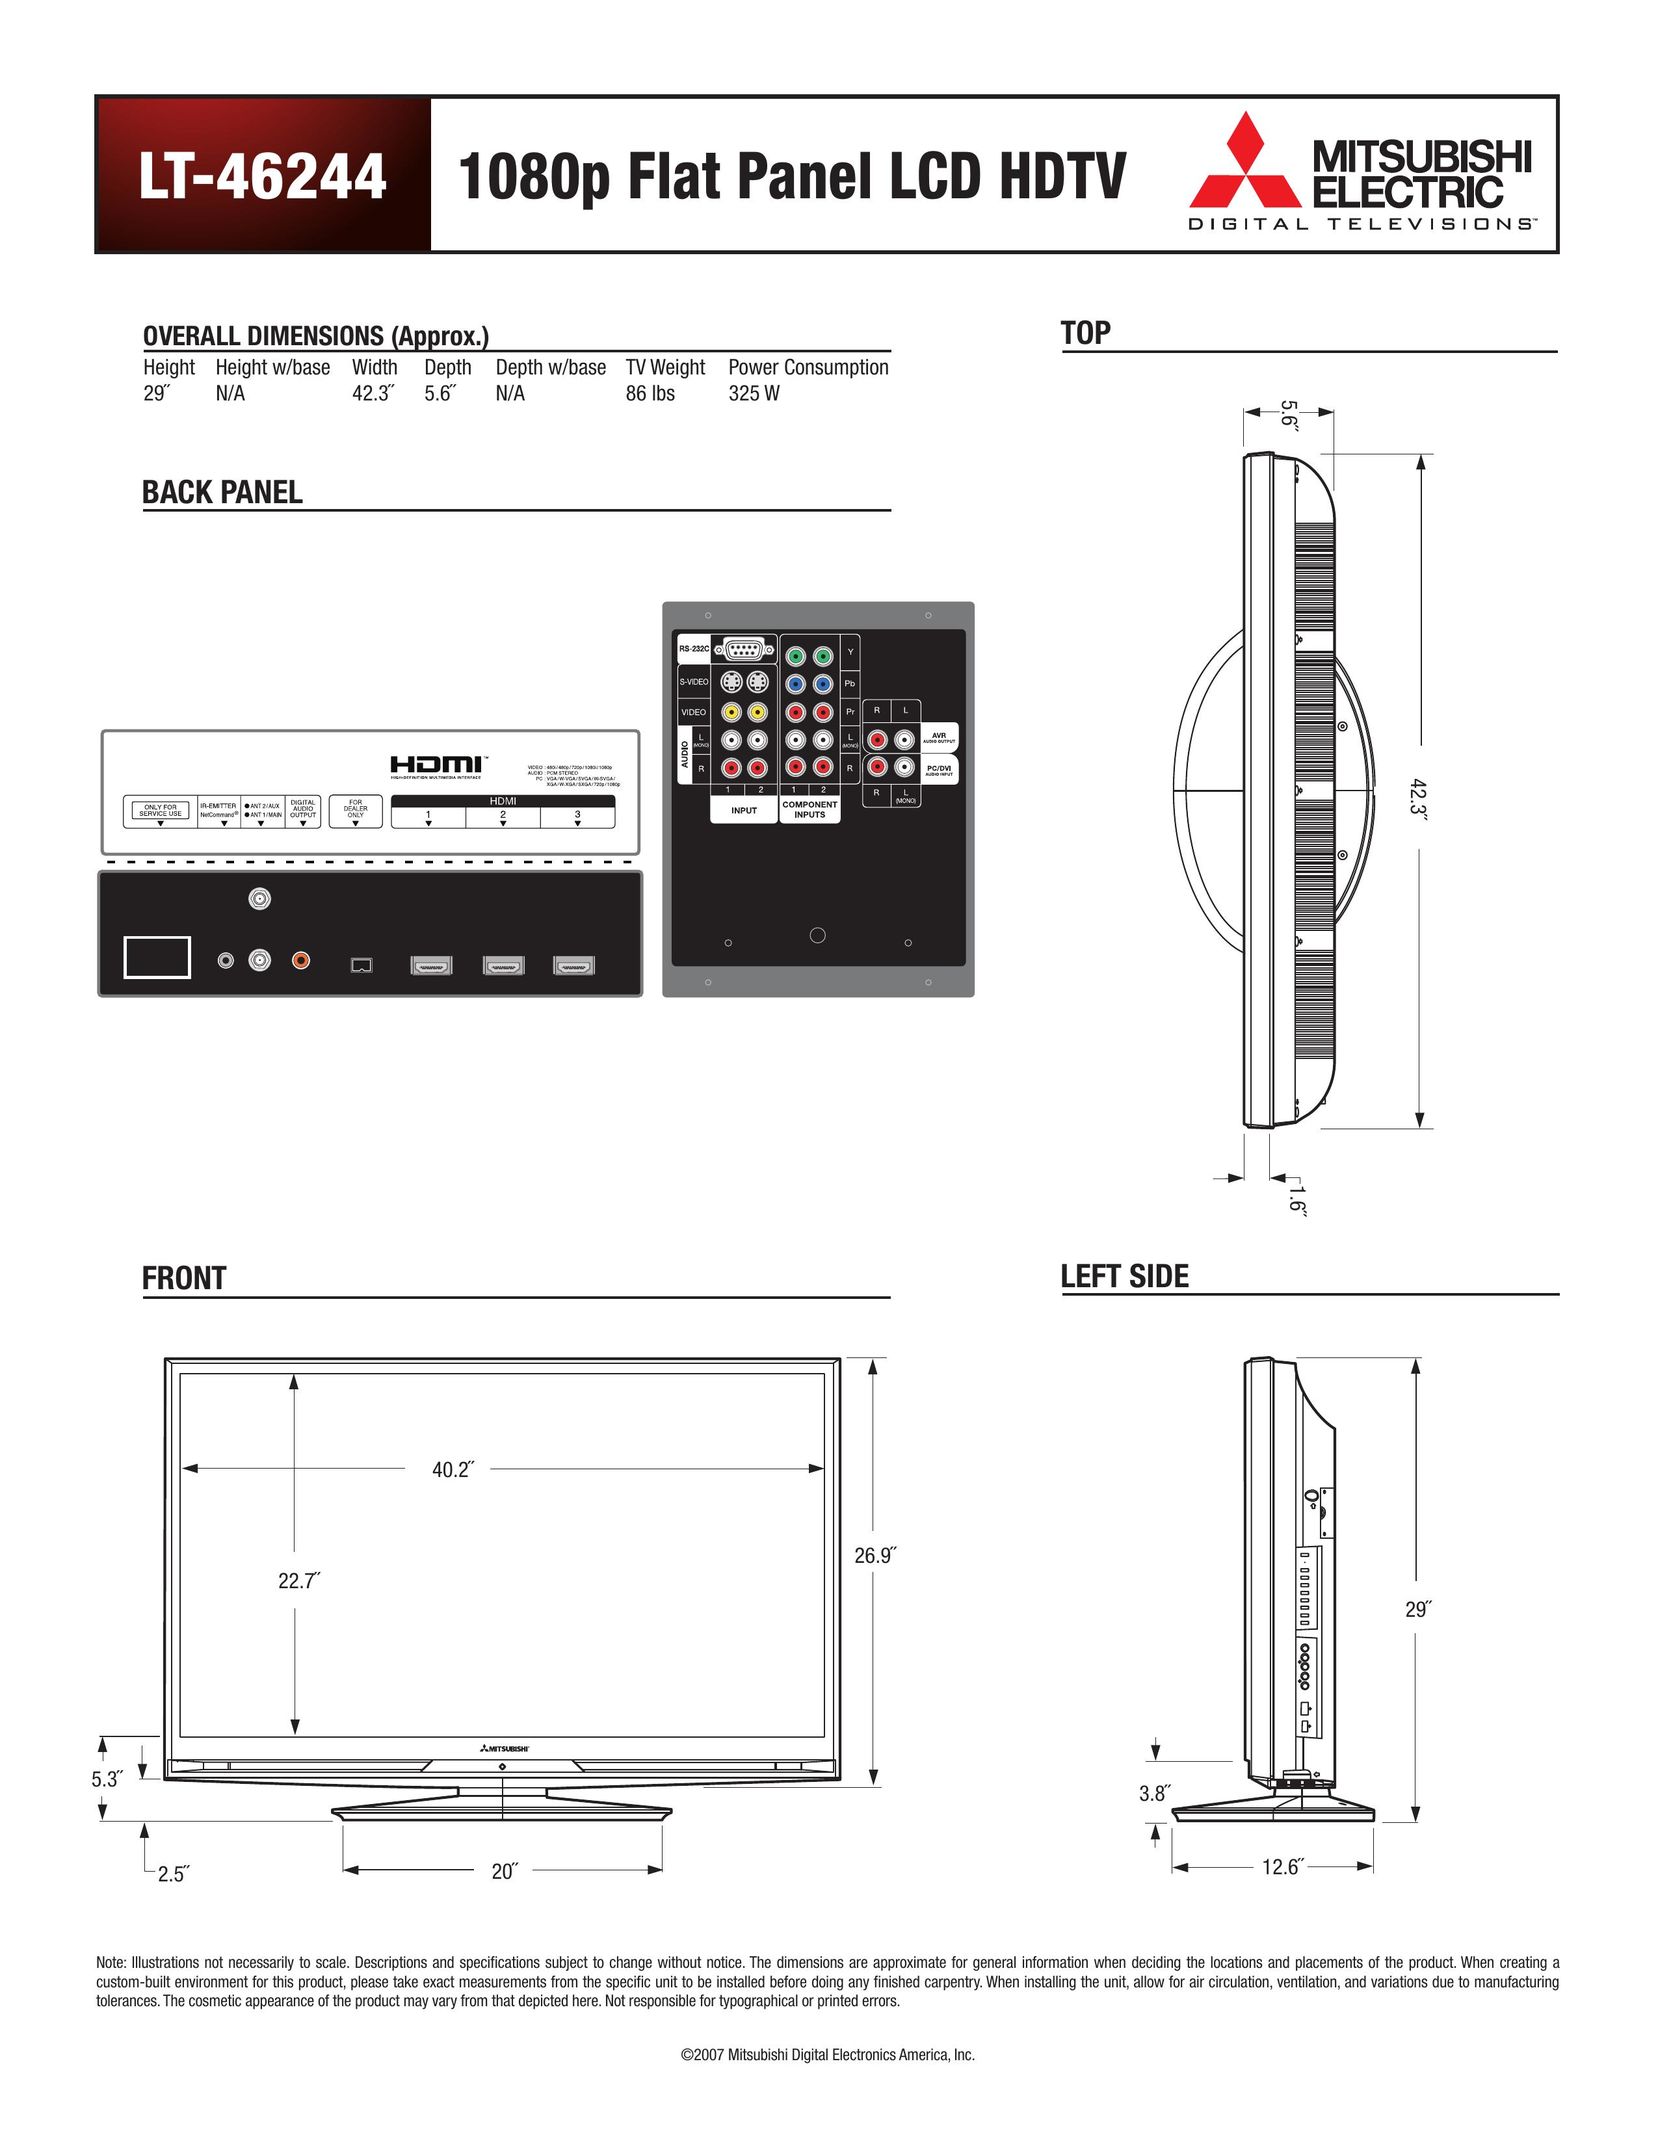 Mitsumi electronic LT-46244 Flat Panel Television User Manual